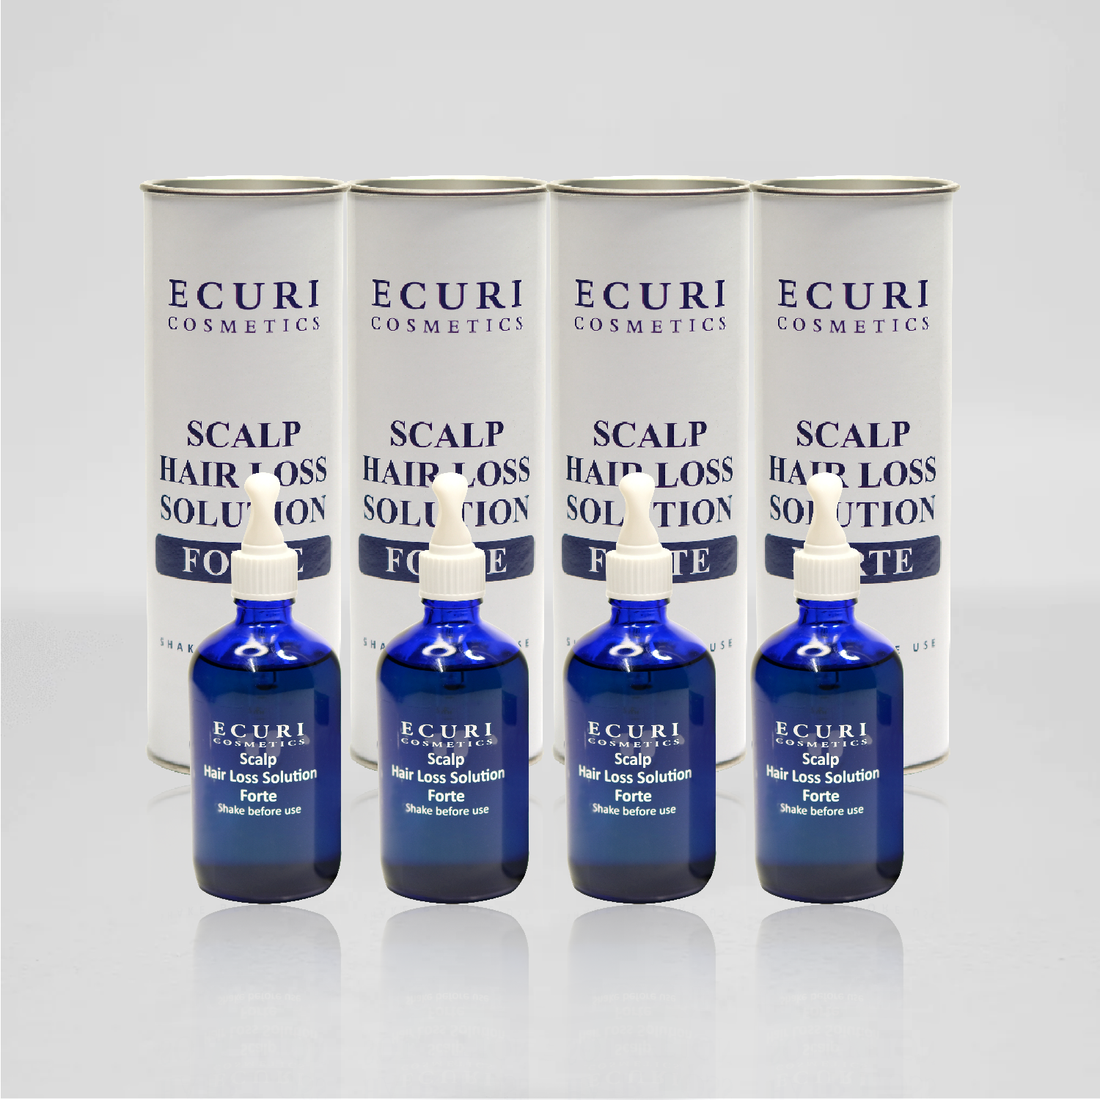 Scalp Hair Loss Solution Forte 100ml x 4 pcs.